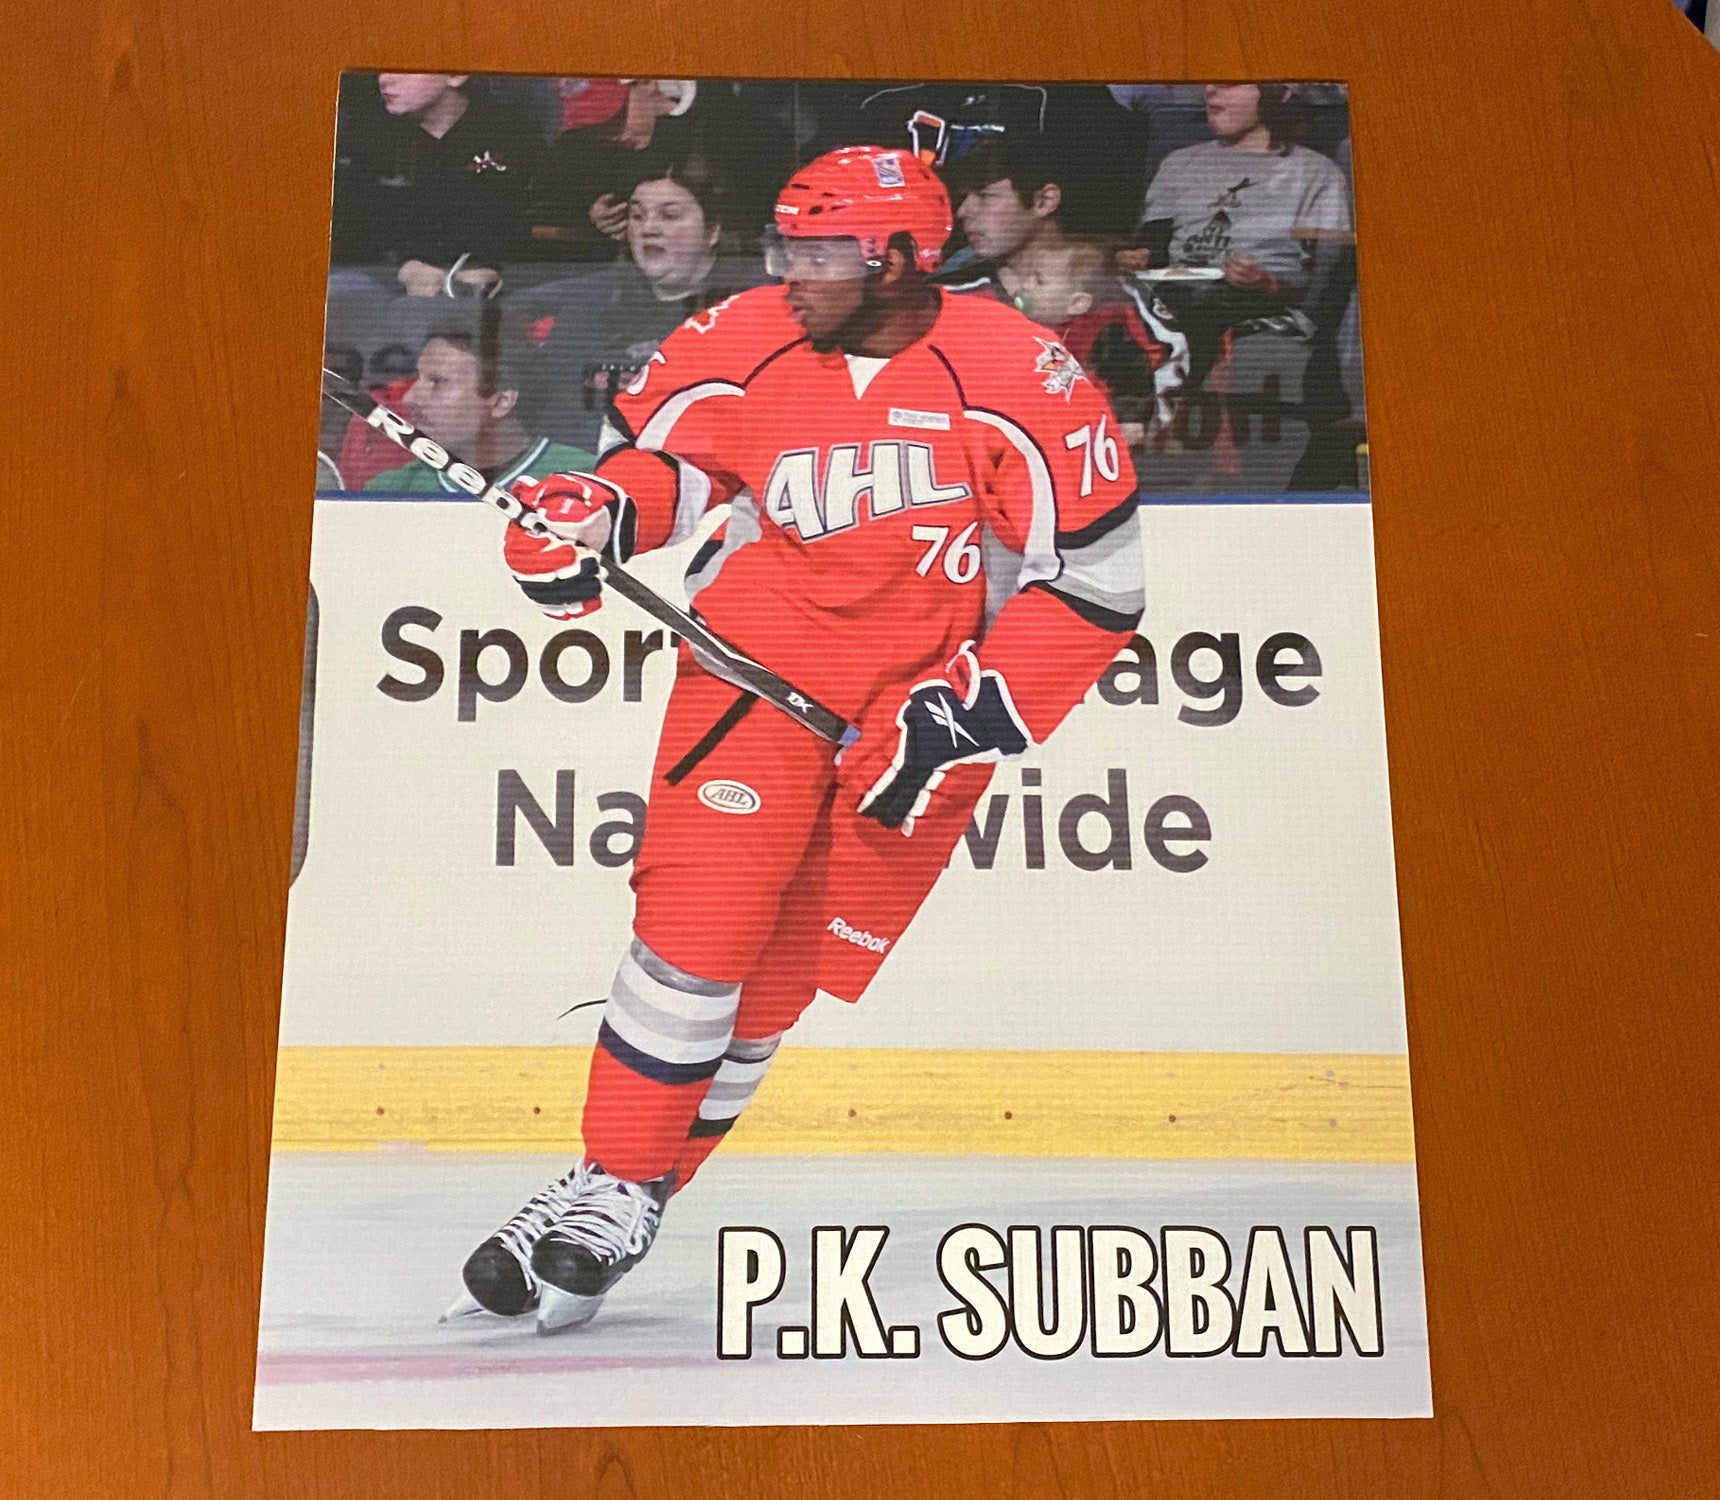 PK Subban Autographed Memorabilia  Signed Photo, Jersey, Collectibles &  Merchandise